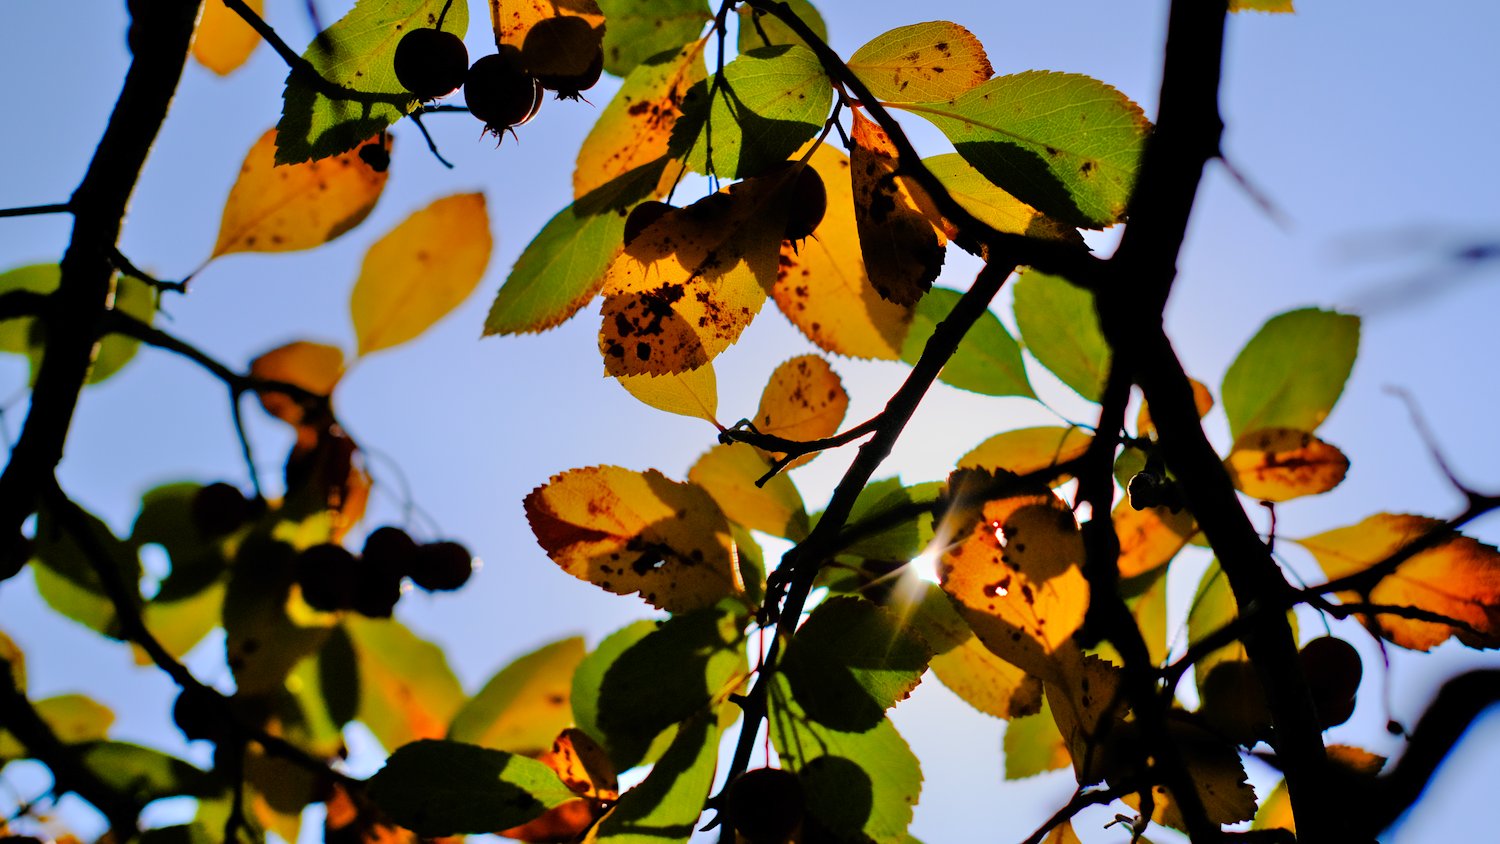 Sun peeking through yellow and green leaves.